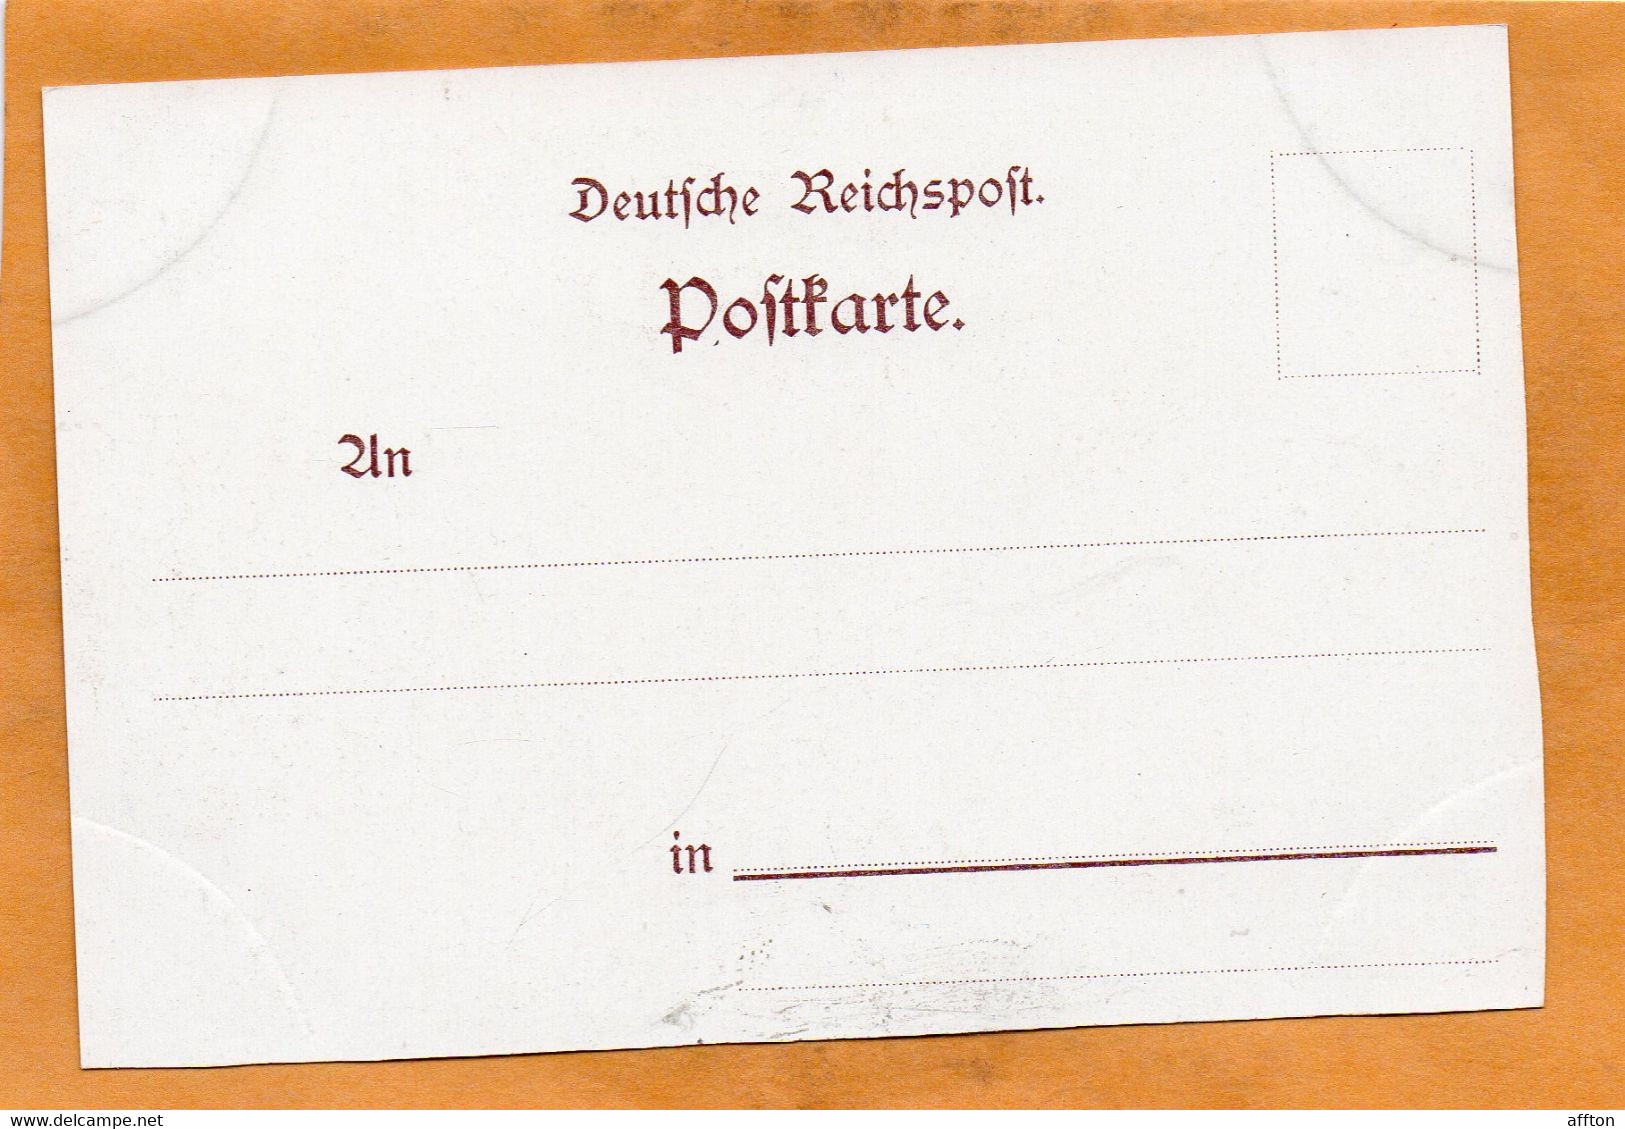 Pillnitz Saxony Germany 1900 Postcard - Pillnitz